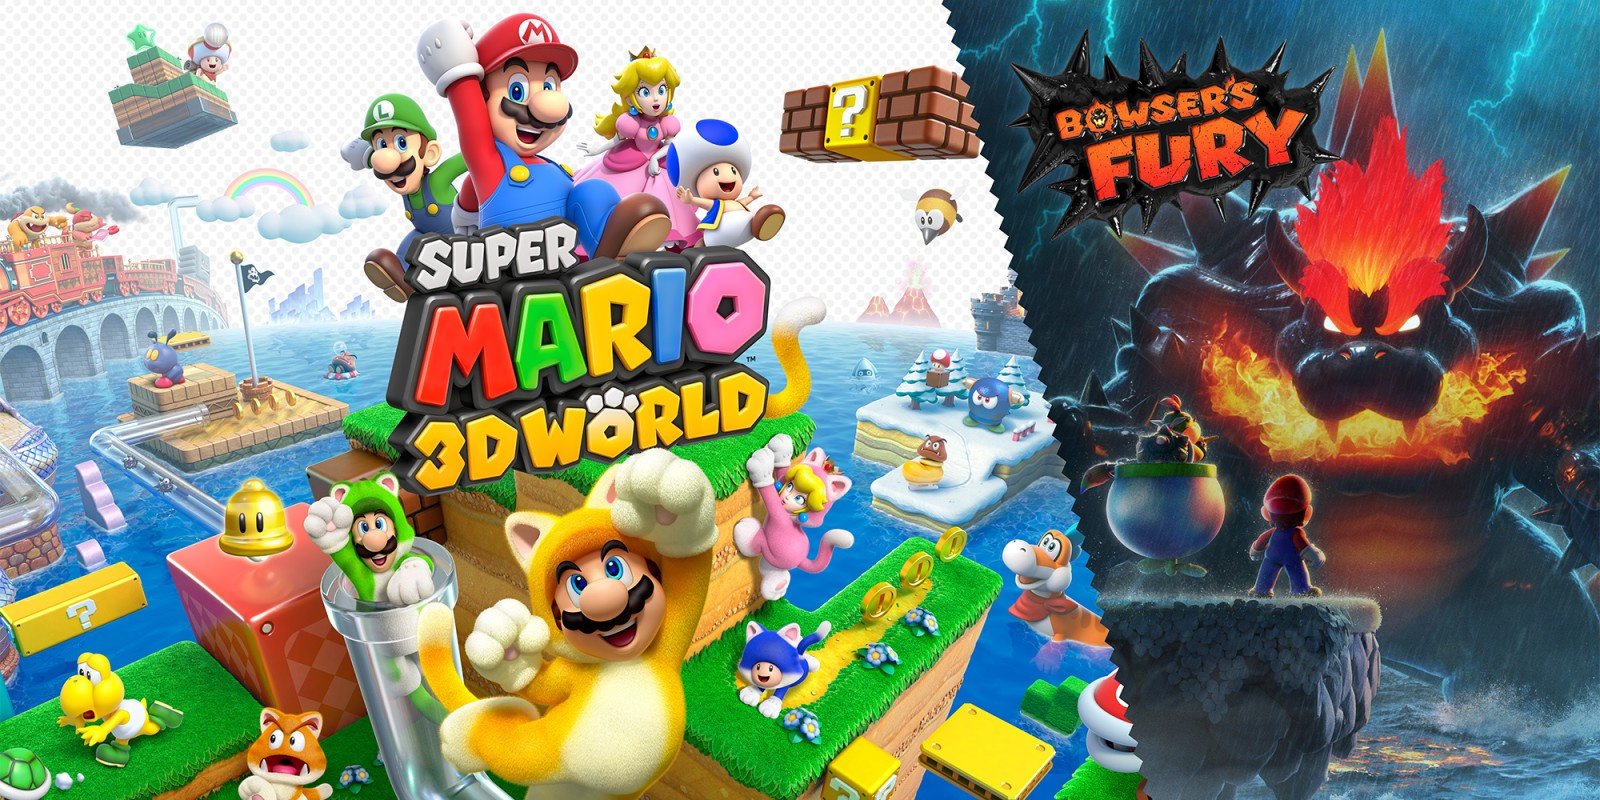 Where To Buy Super Mario 3d World Bowser S Fury Nintendo Life